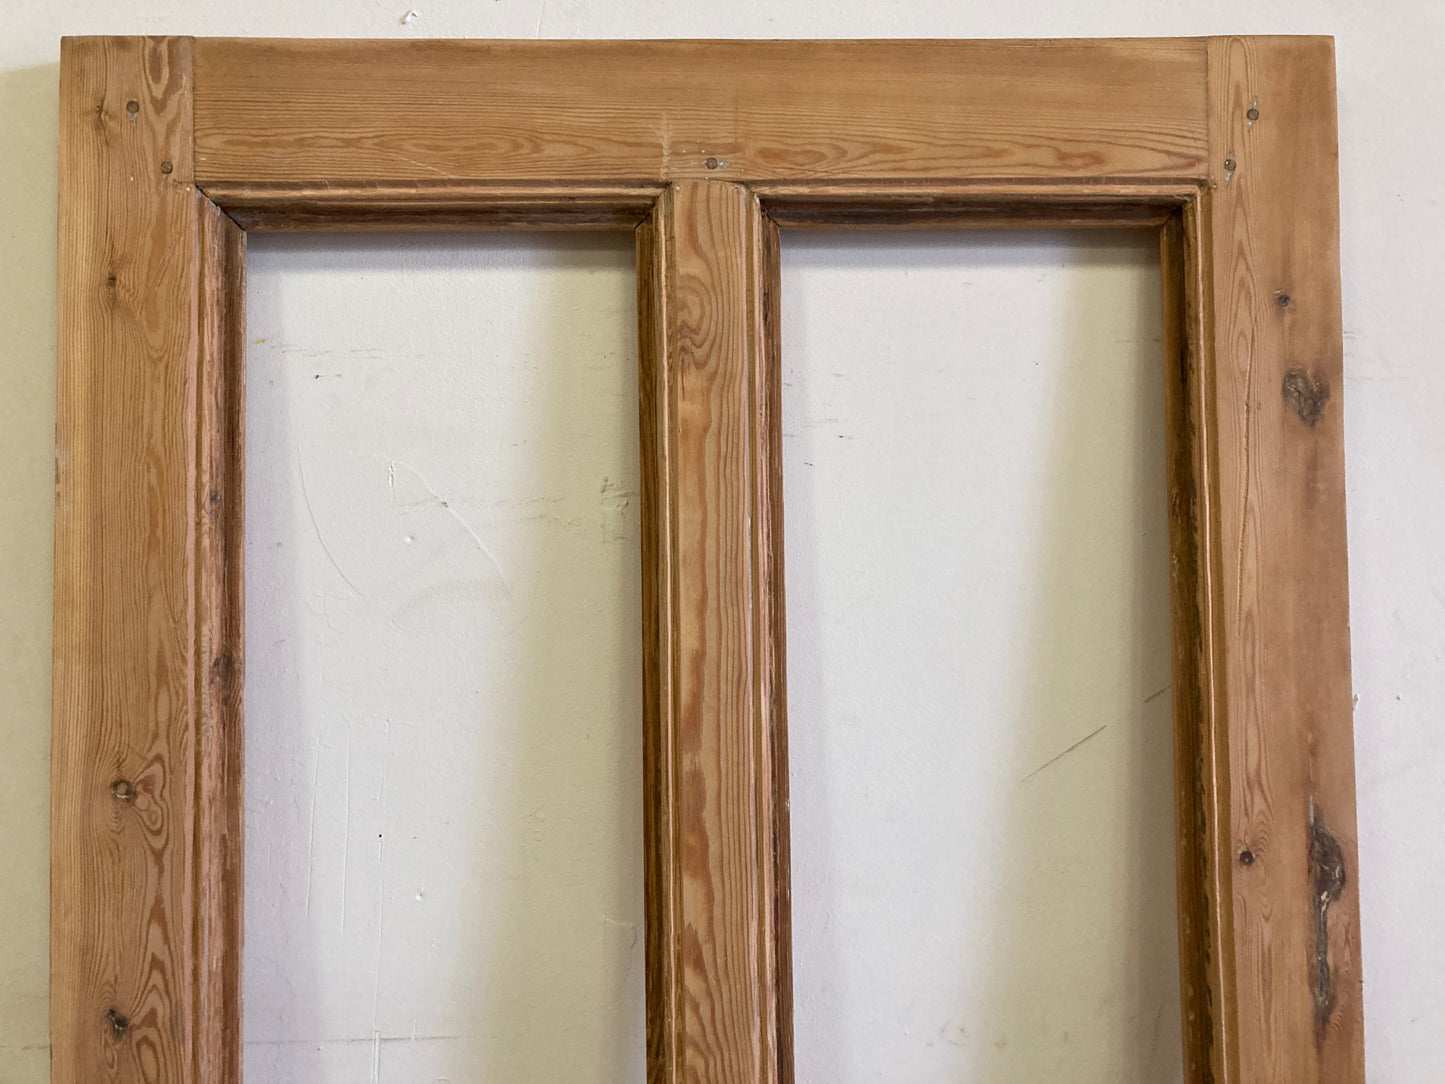 Houten binnendeur met venster- afgeschuurd (219 x 85)